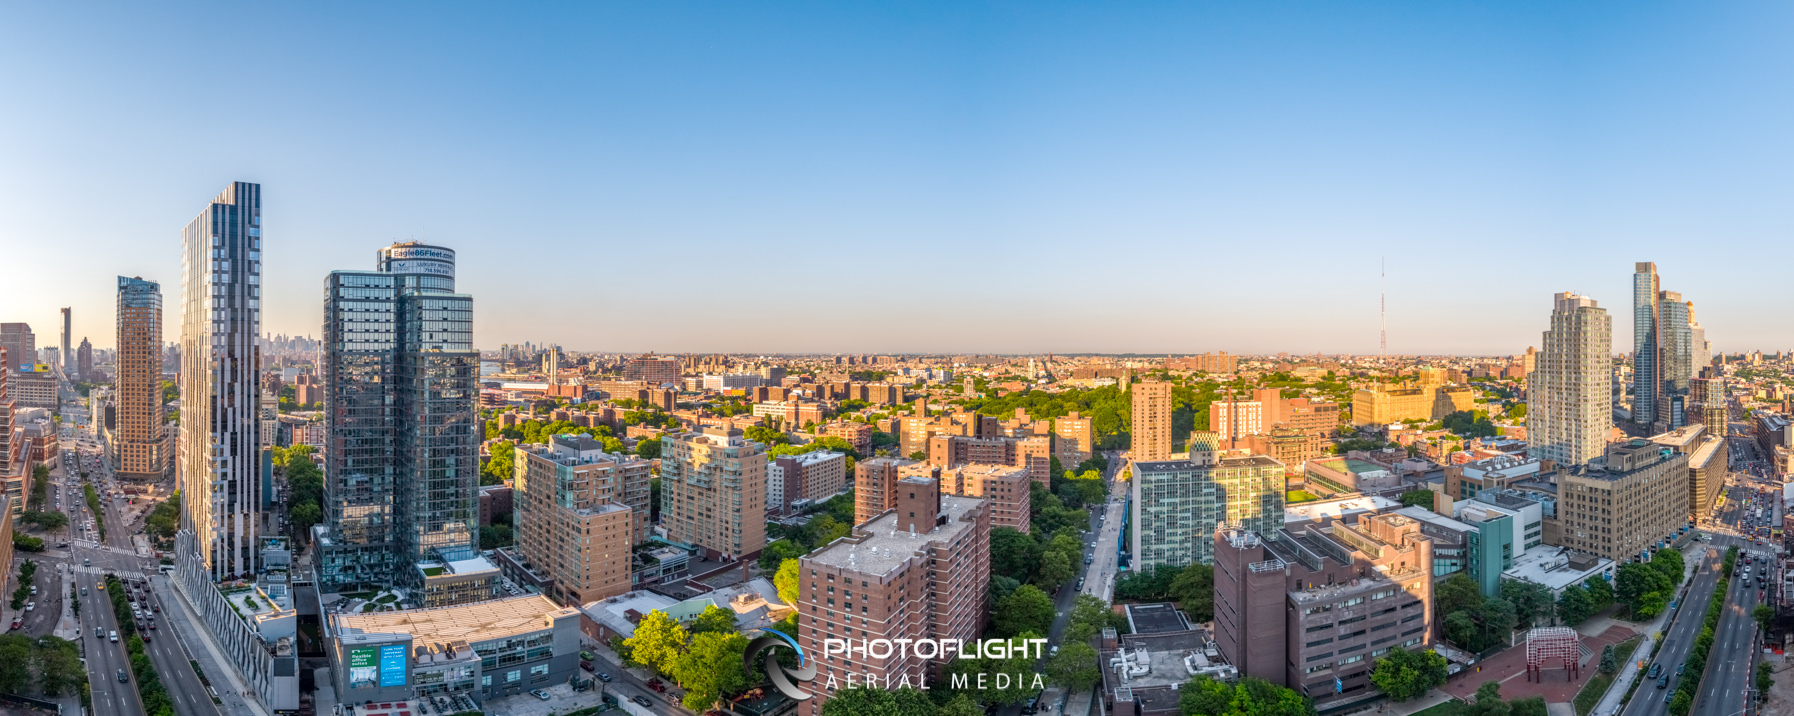 Manhattan Real Estate Future View Drone Photography - NYC real estate drone photography by Photoflight aerial media